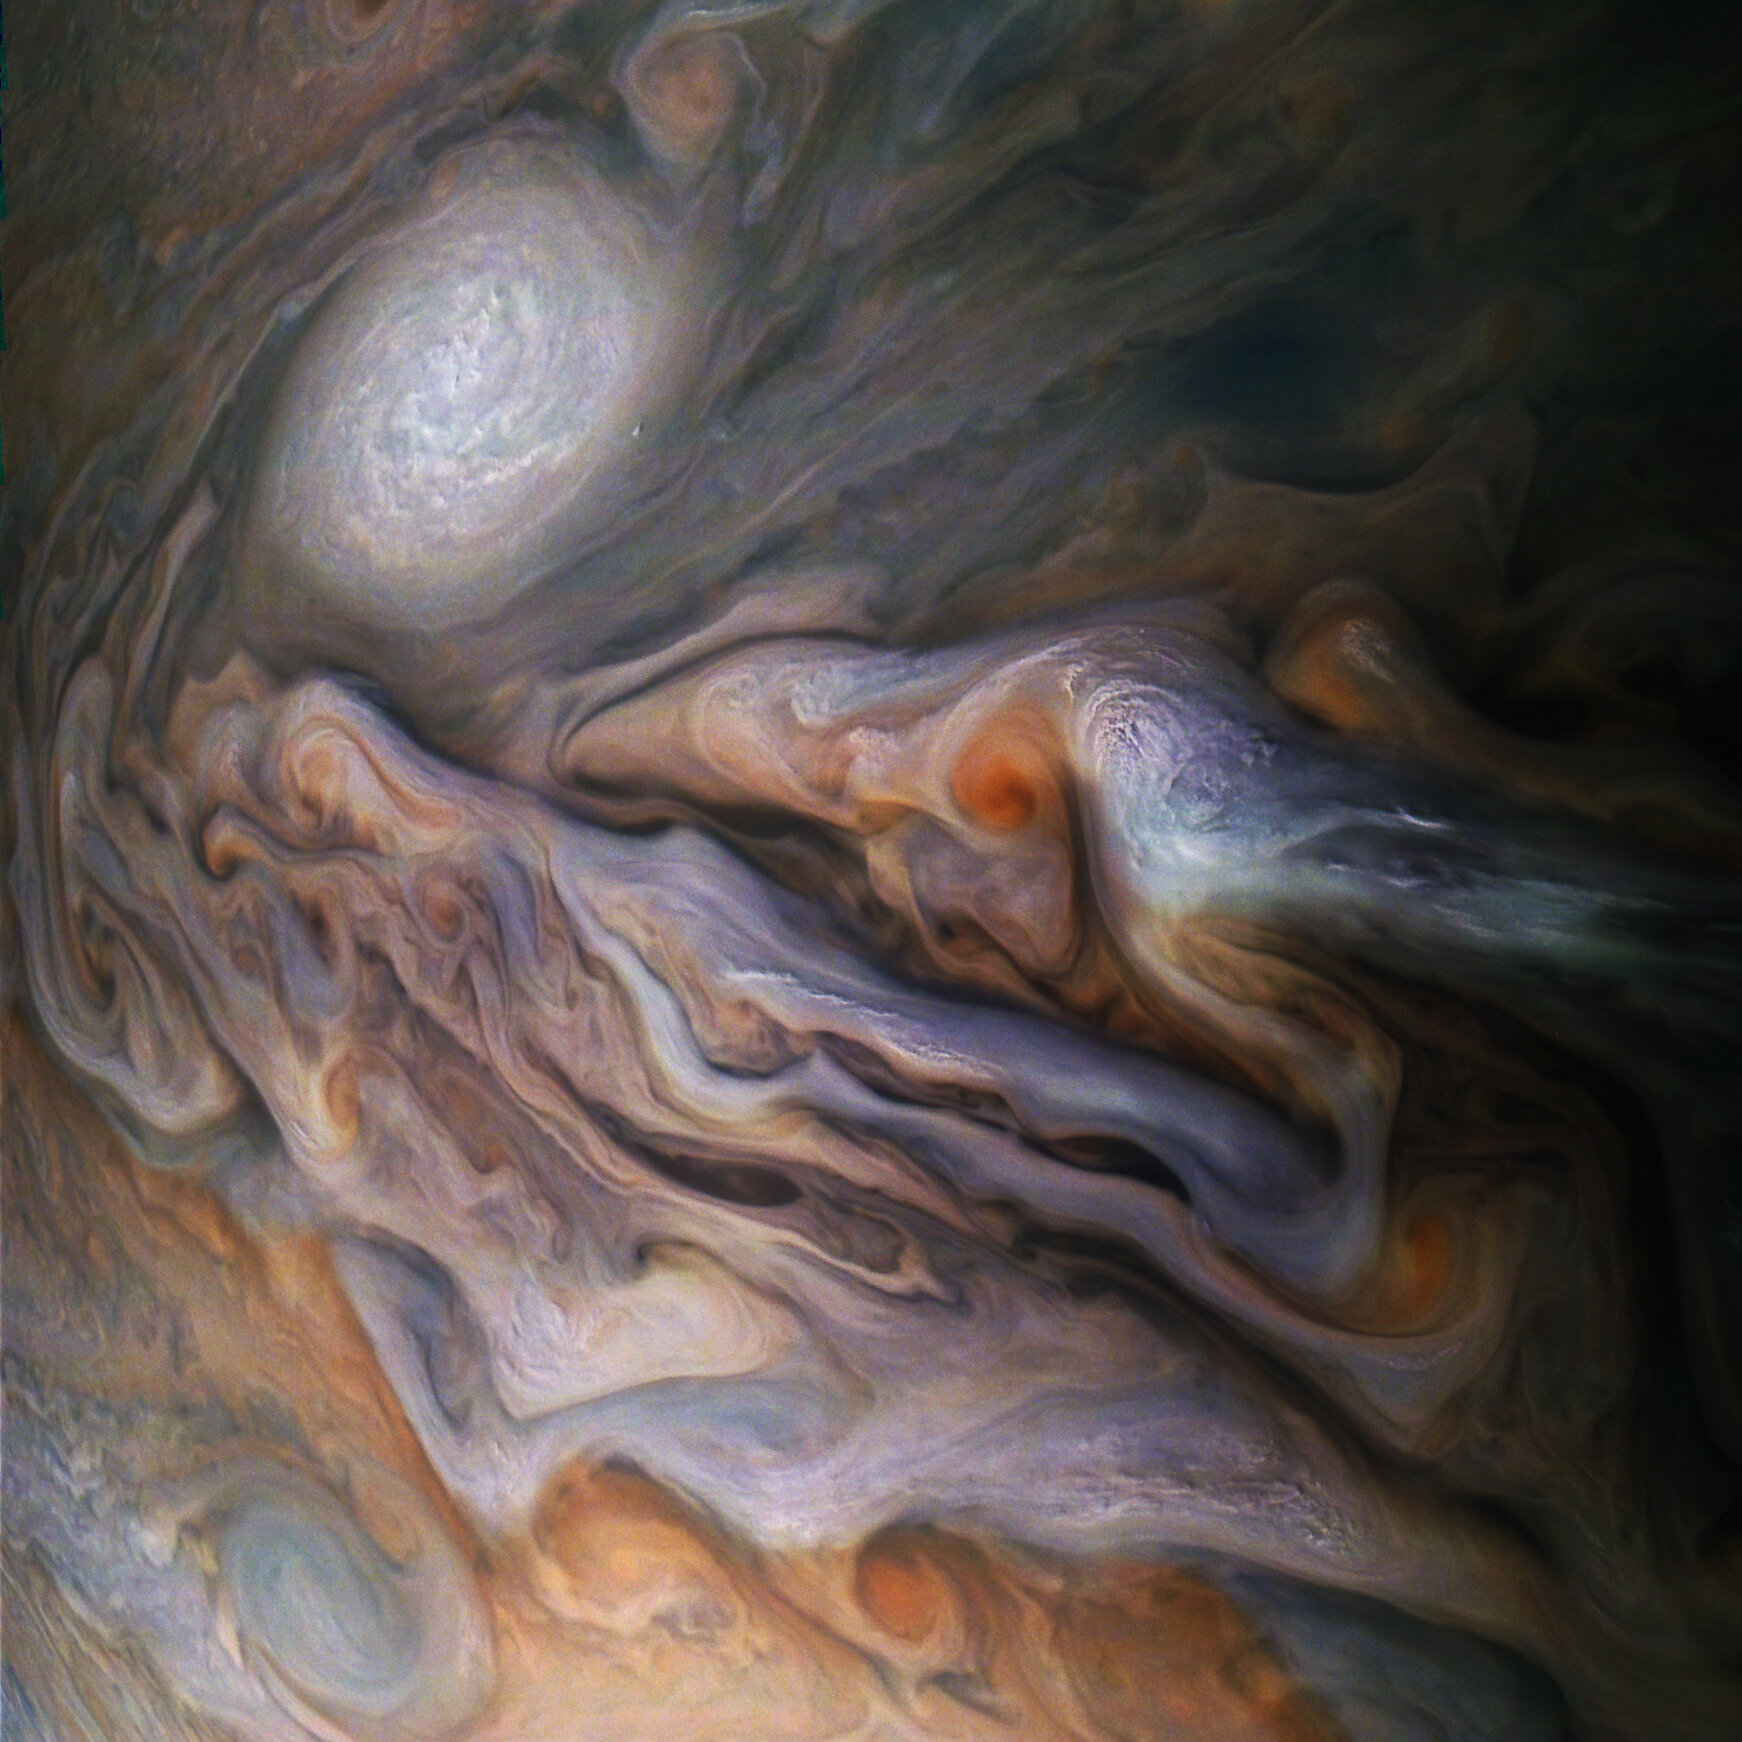 Ocean physics explain cyclones on Jupiter